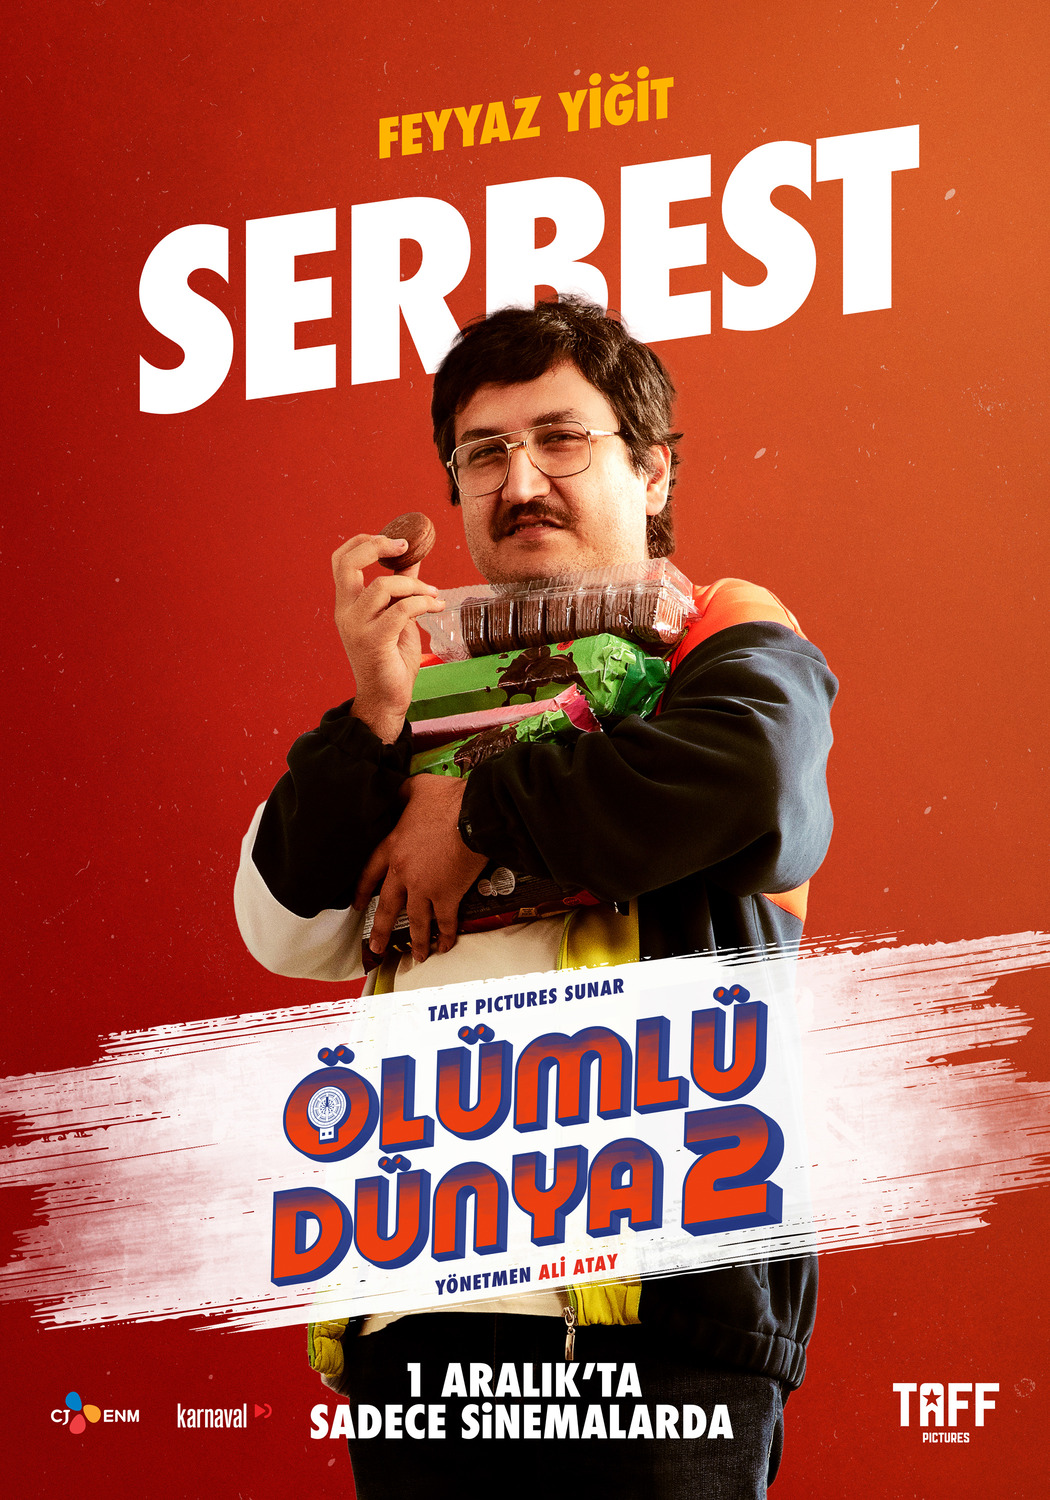 Extra Large Movie Poster Image for Ölümlü Dünya 2 (#6 of 11)